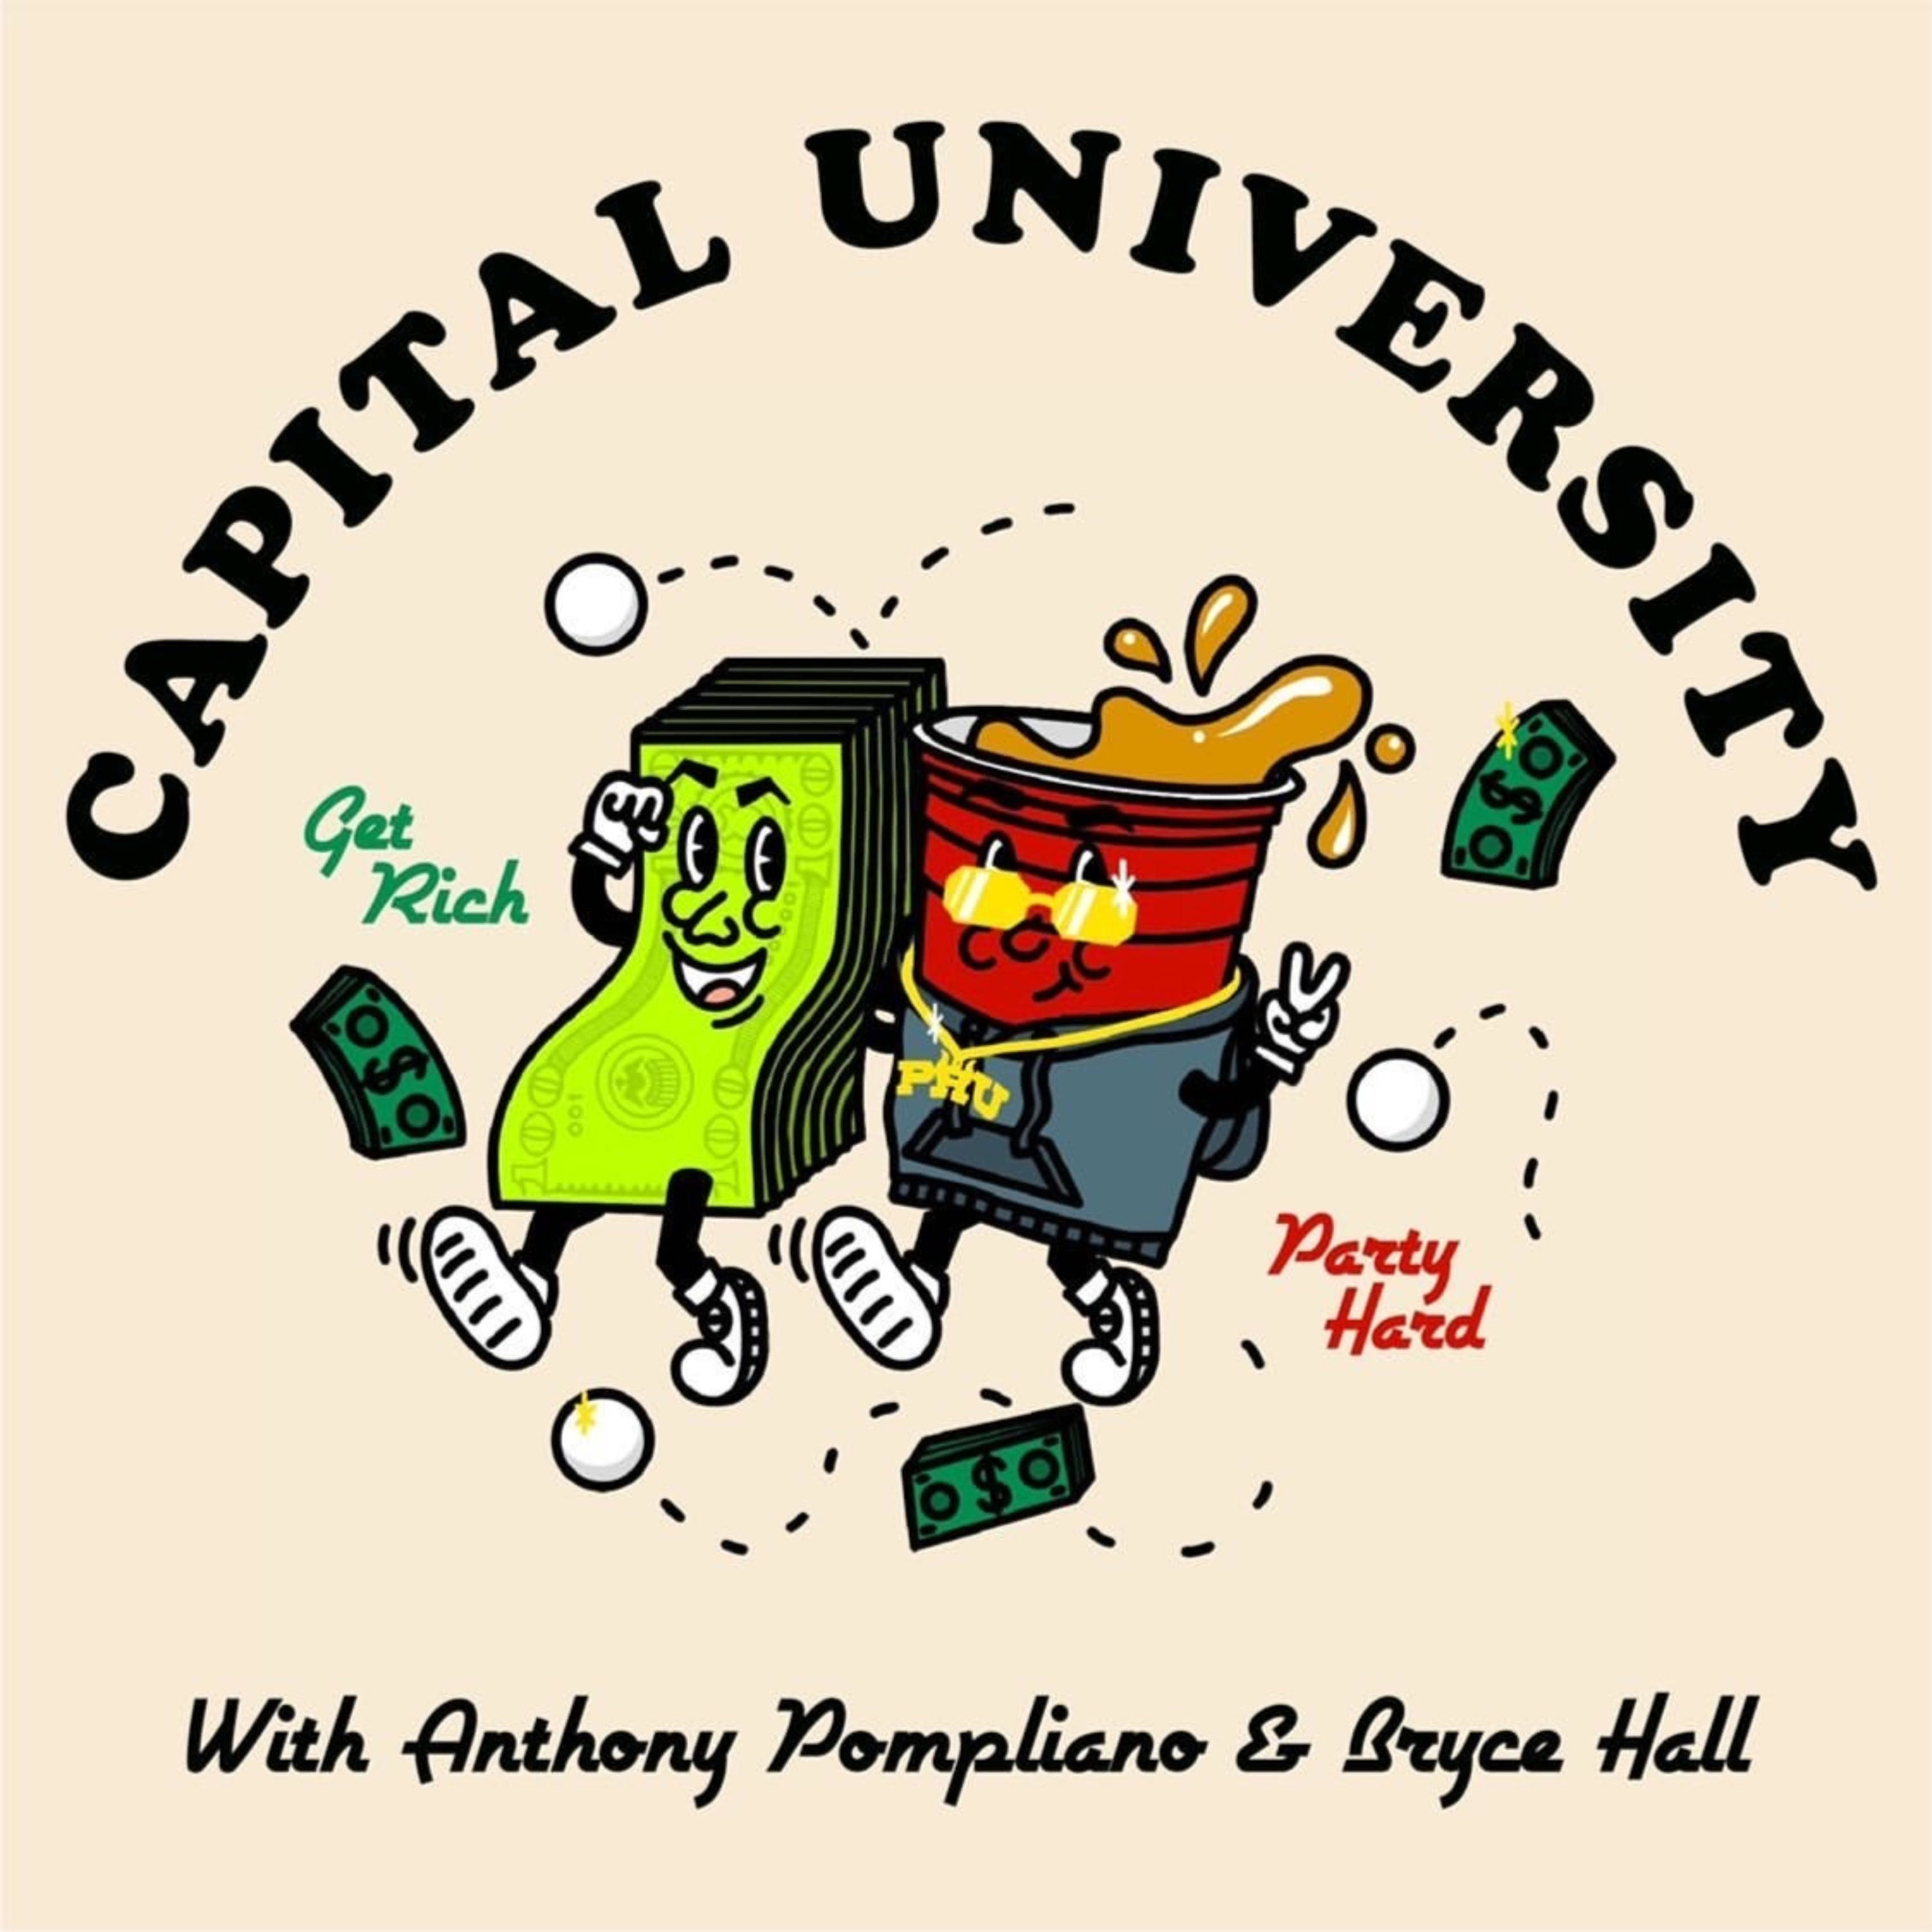 Capital University 